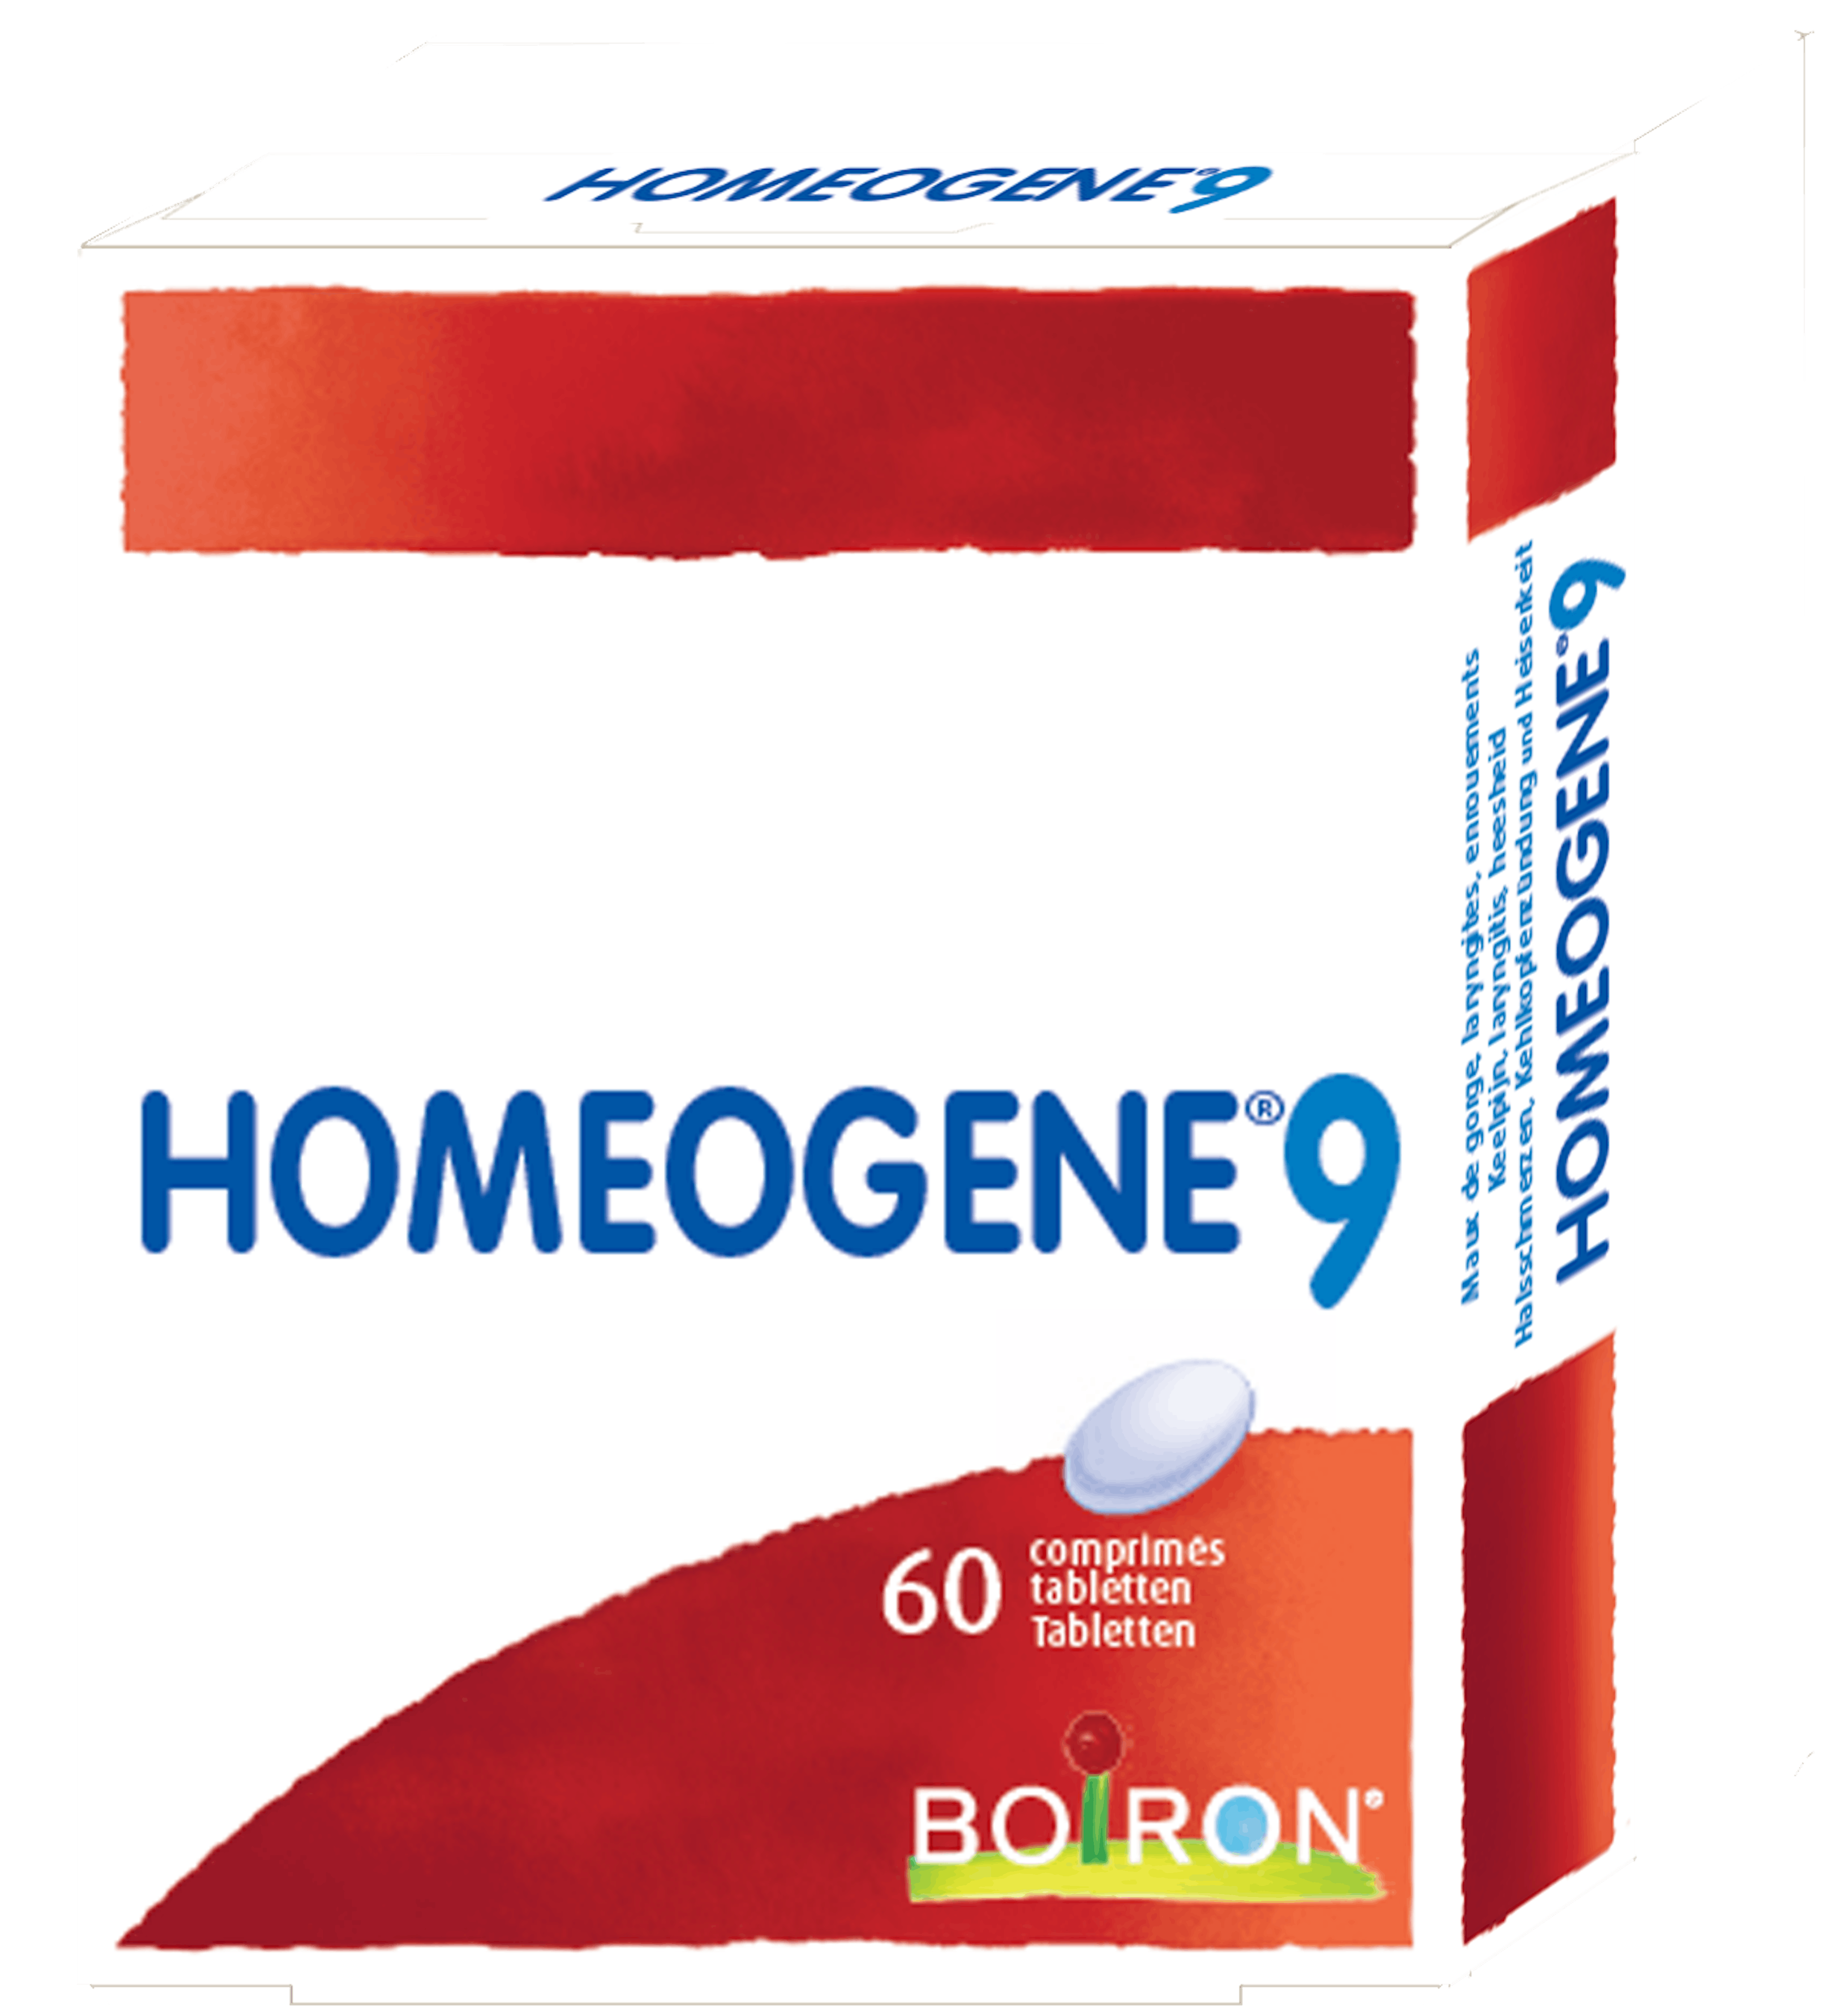 homeogene 9 - keelpijn